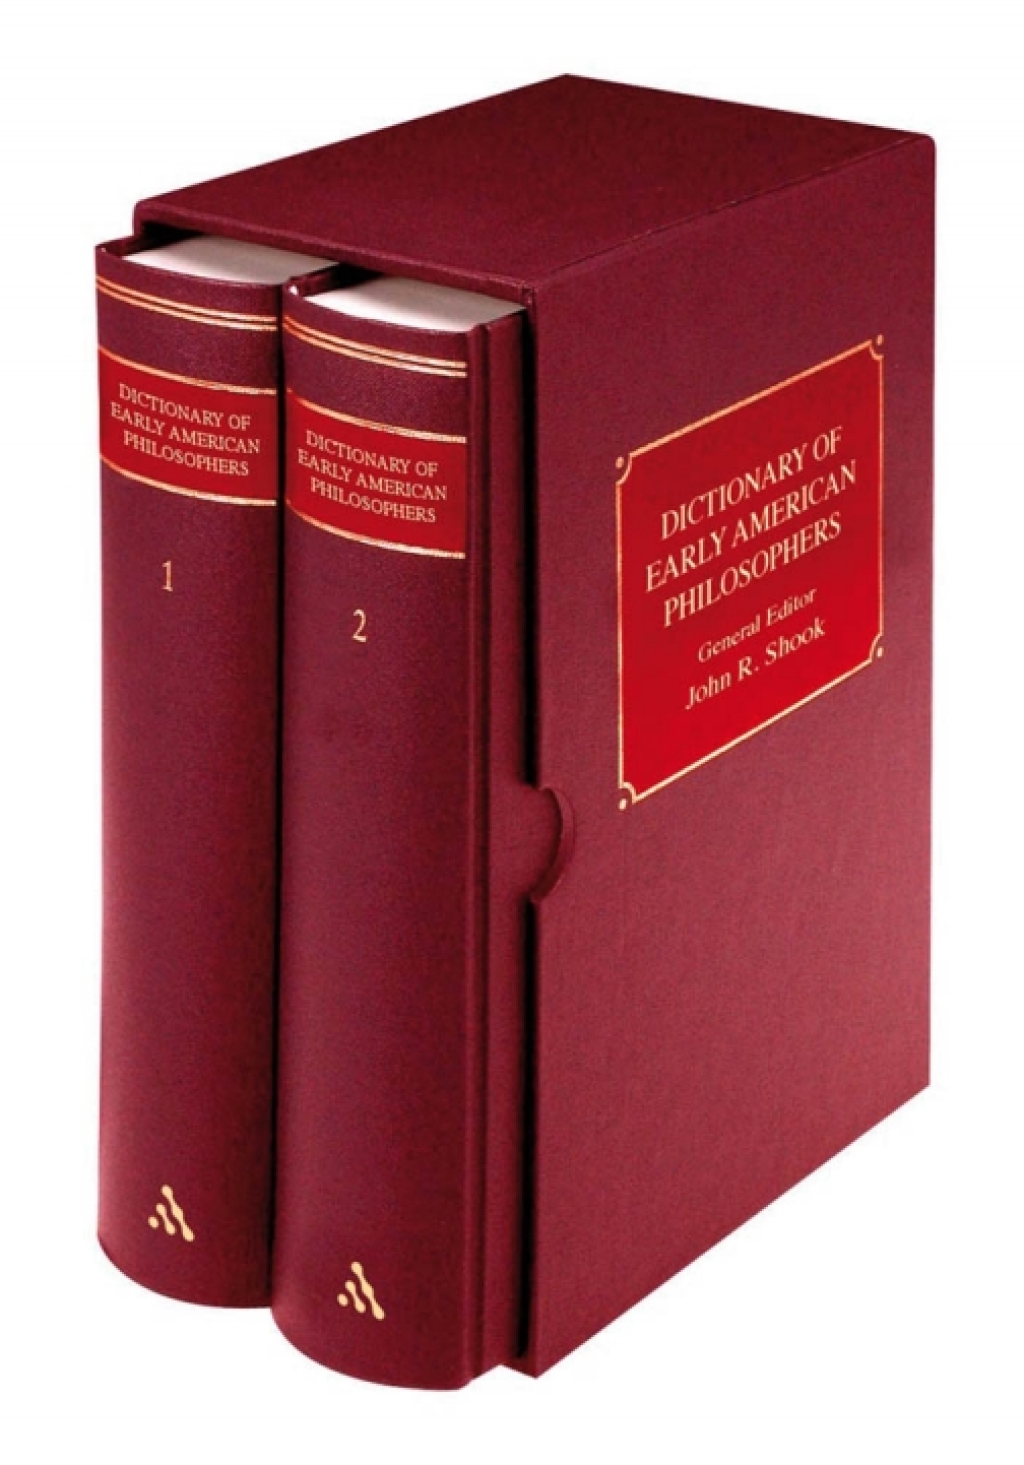 Dictionary of Early American Philosophers (eBook) - John R. Shook